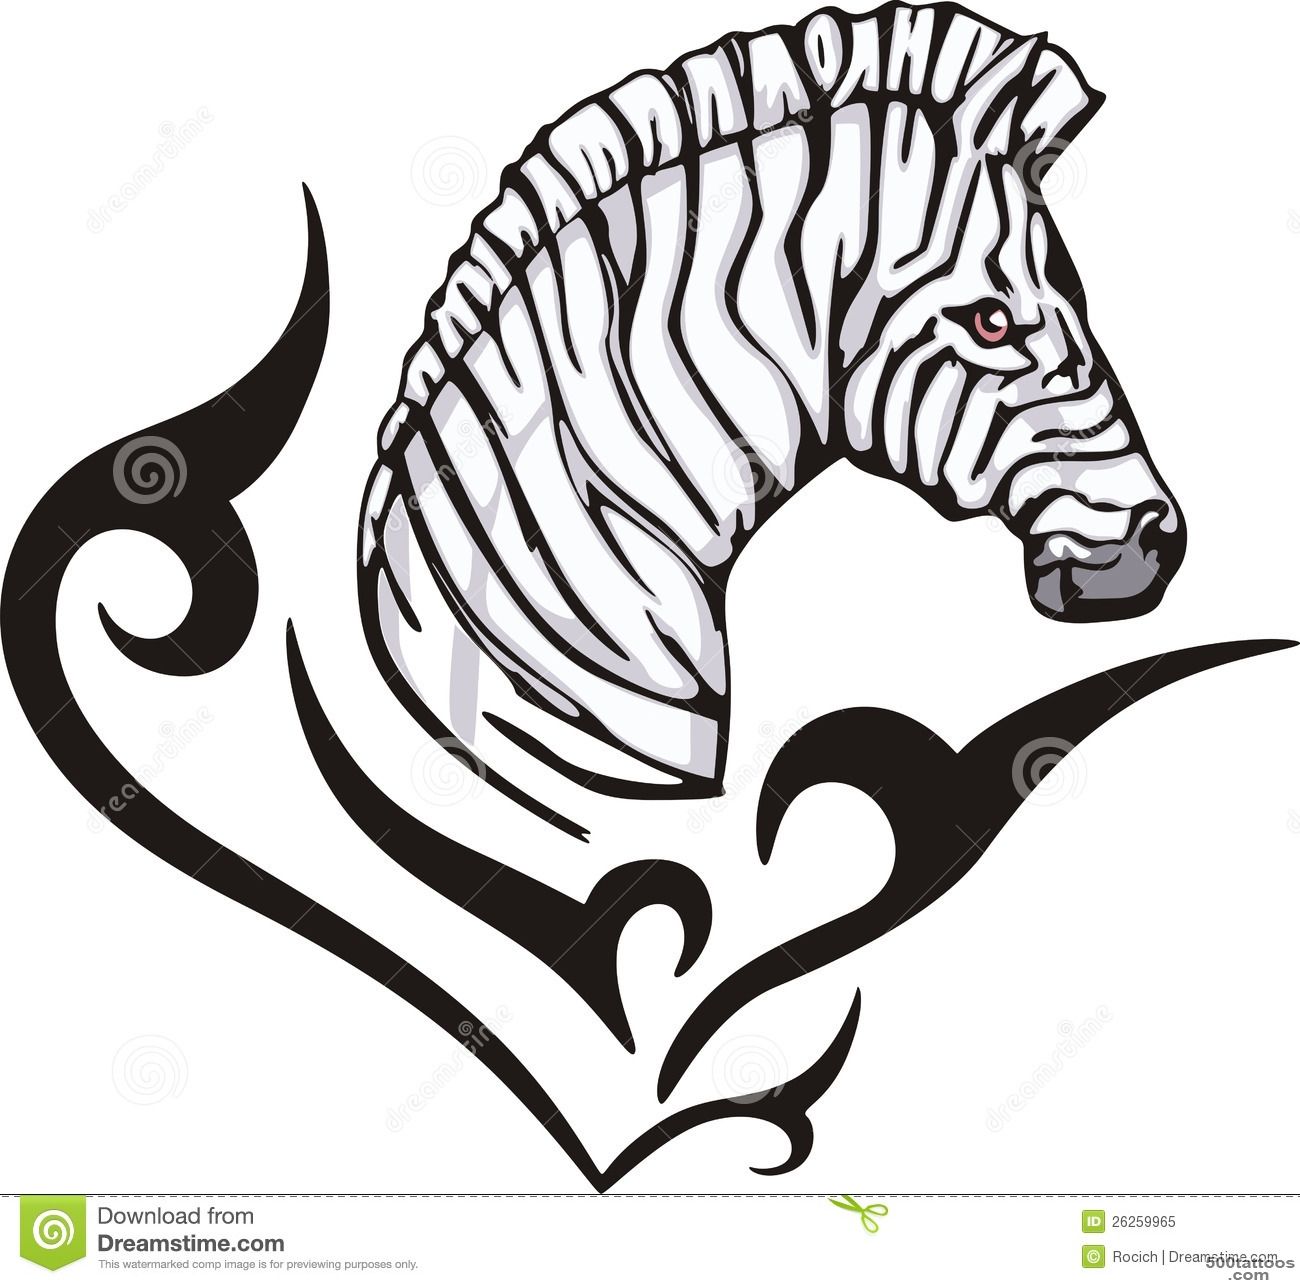 Zebra Tattoo Royalty Free Stock Photo   Image 26259965_36